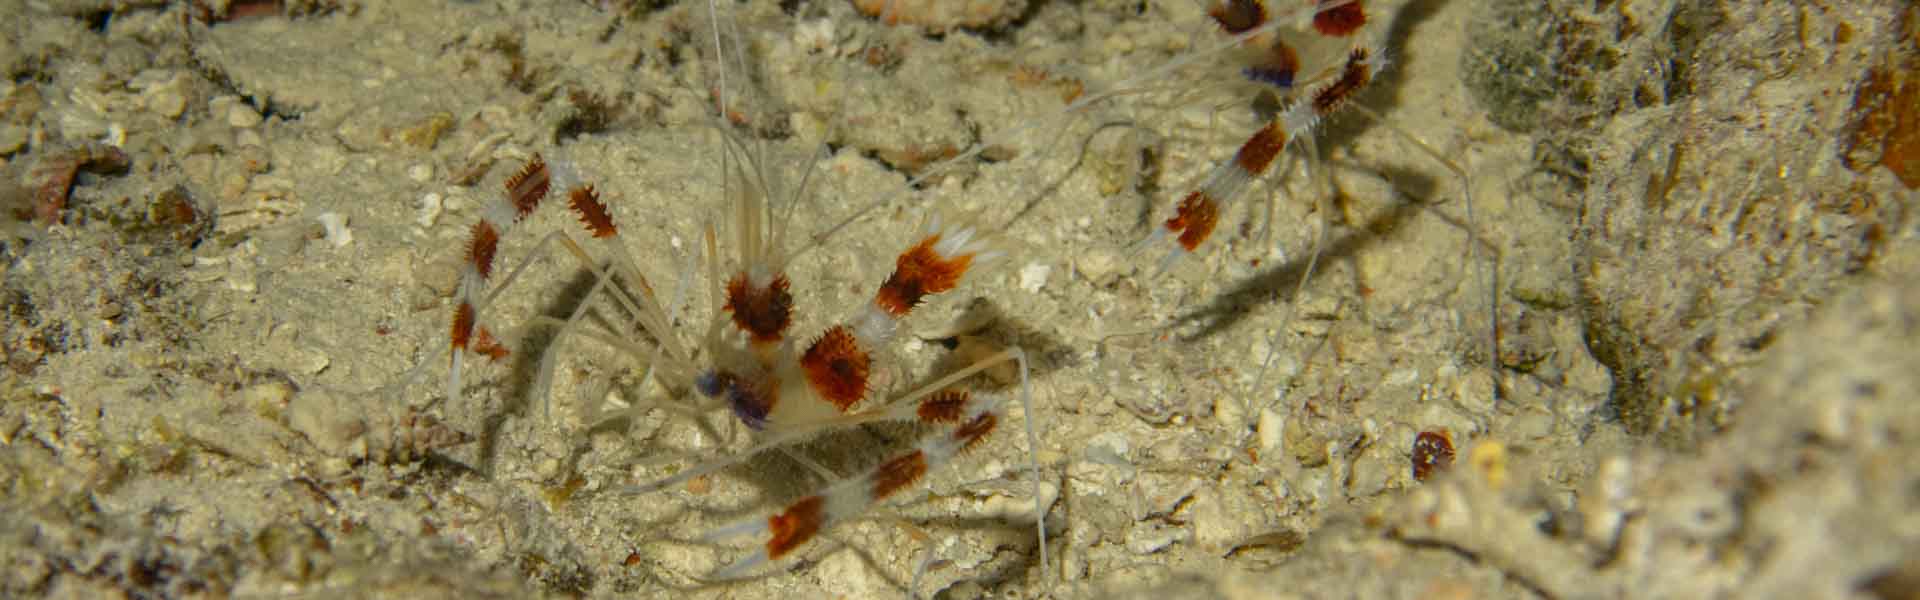 Boxer shrimp